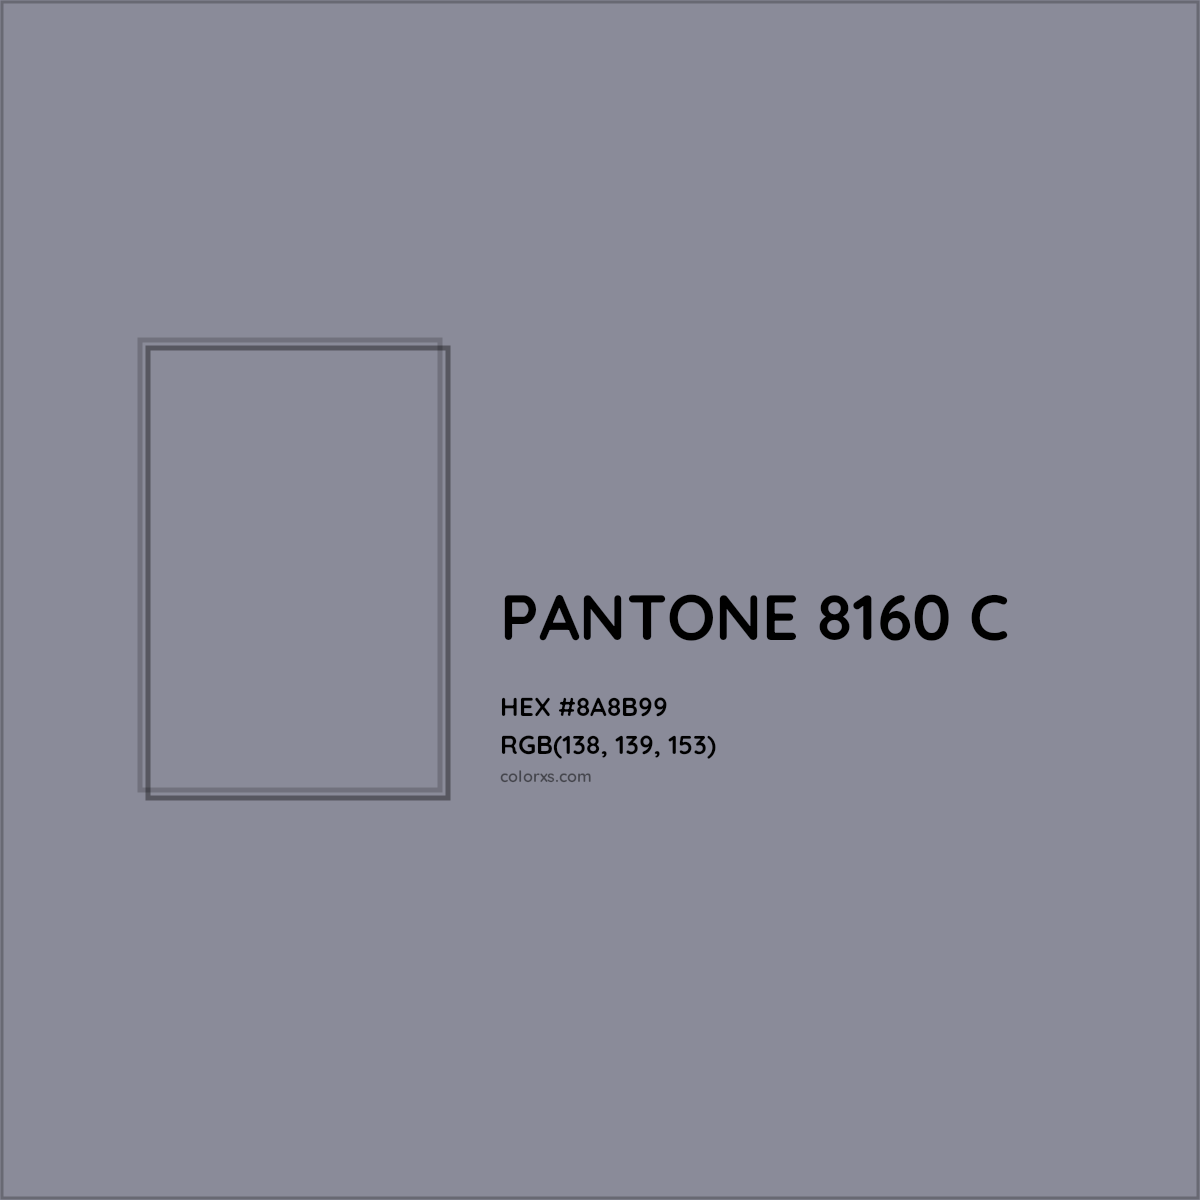 HEX #8A8B99 PANTONE 8160 C CMS Pantone PMS - Color Code